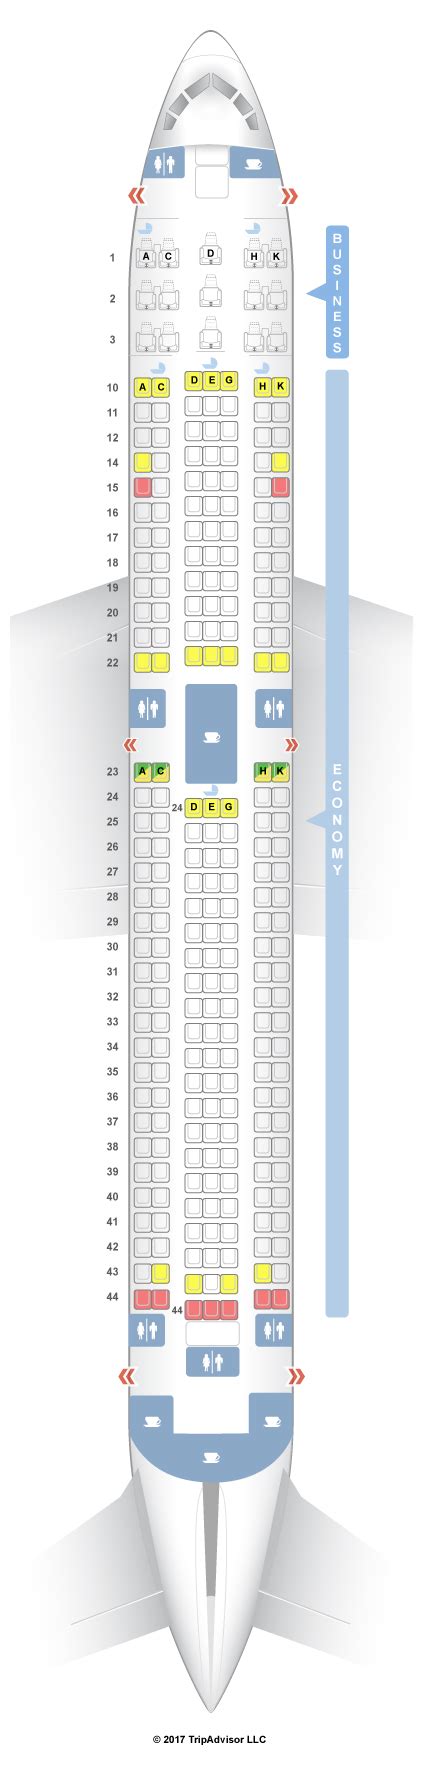 Thomson Boeing 767 Passenger Seating Chart